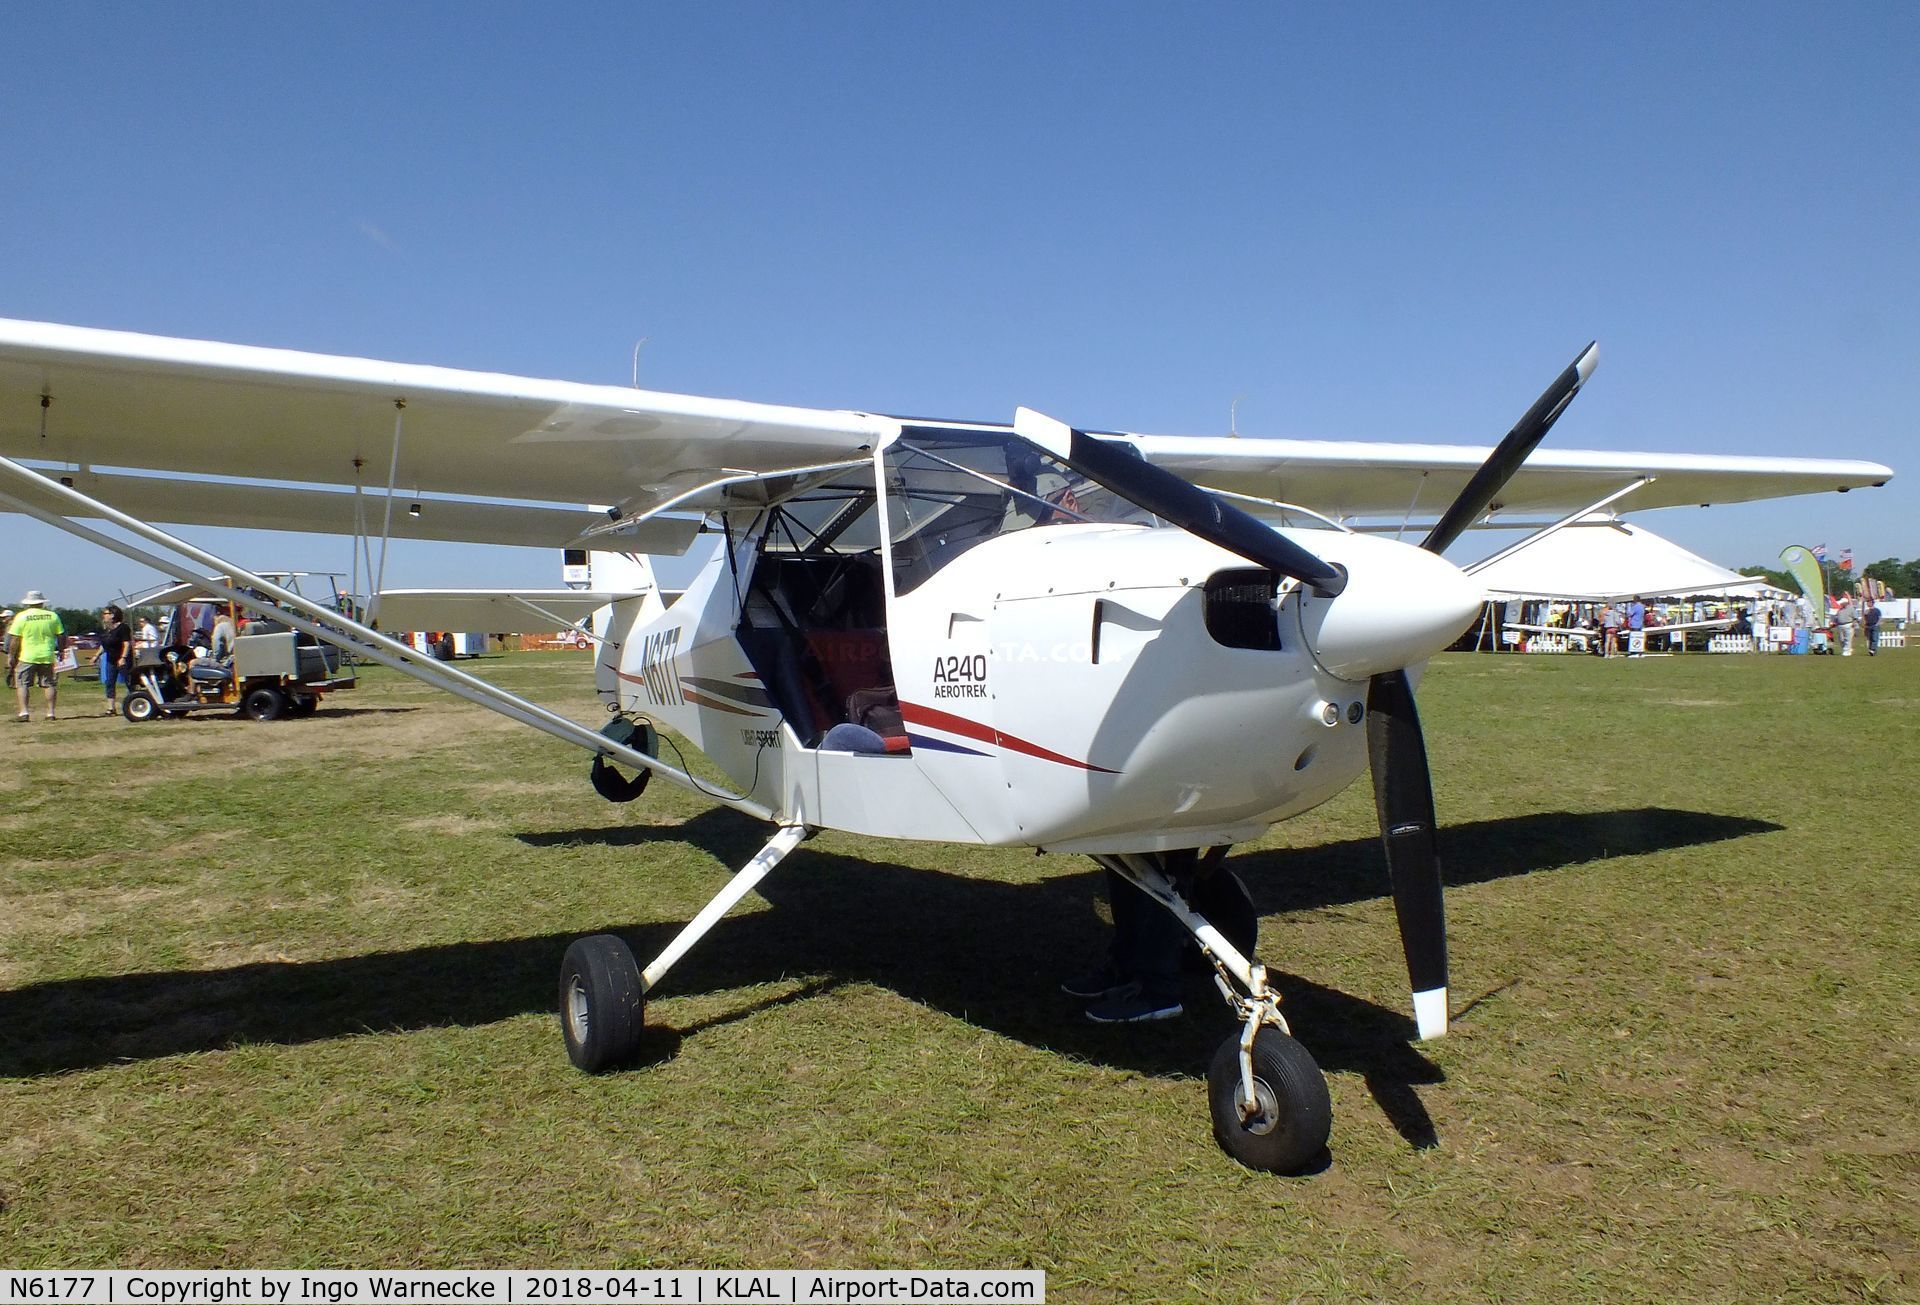 N6177, Aeropro CZ A240 C/N 31810, Aerotrek A240 (Aeropro Eurofox-3K) at 2018 Sun 'n Fun, Lakeland FL